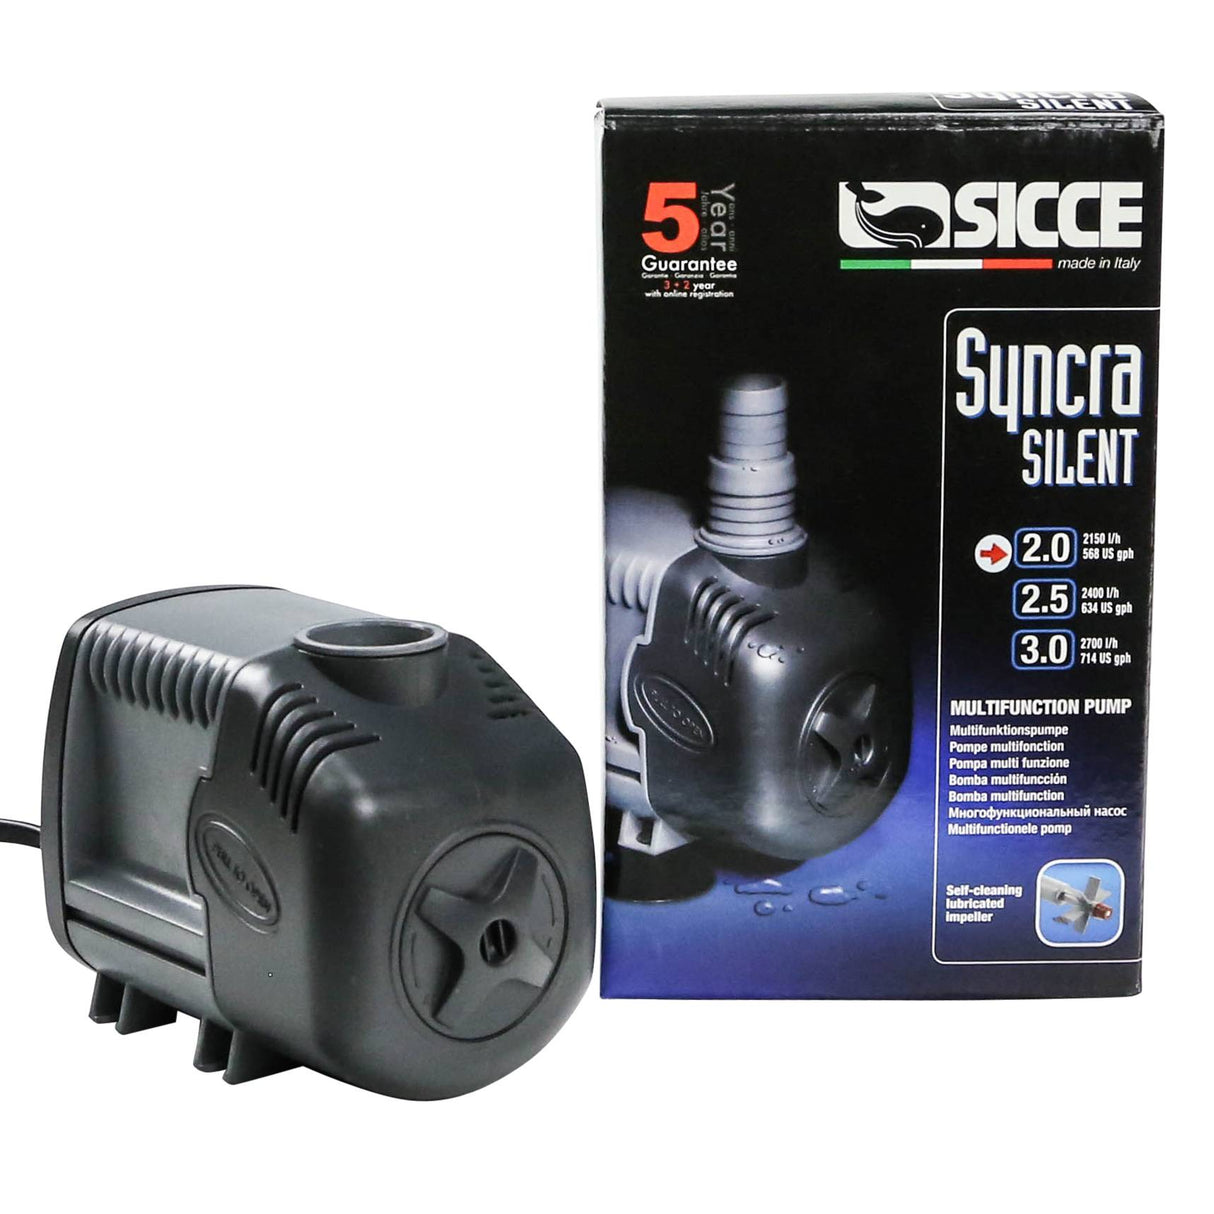 Syncra Silent 2.0 Pump (568 GPH) - Sicce - Sicce